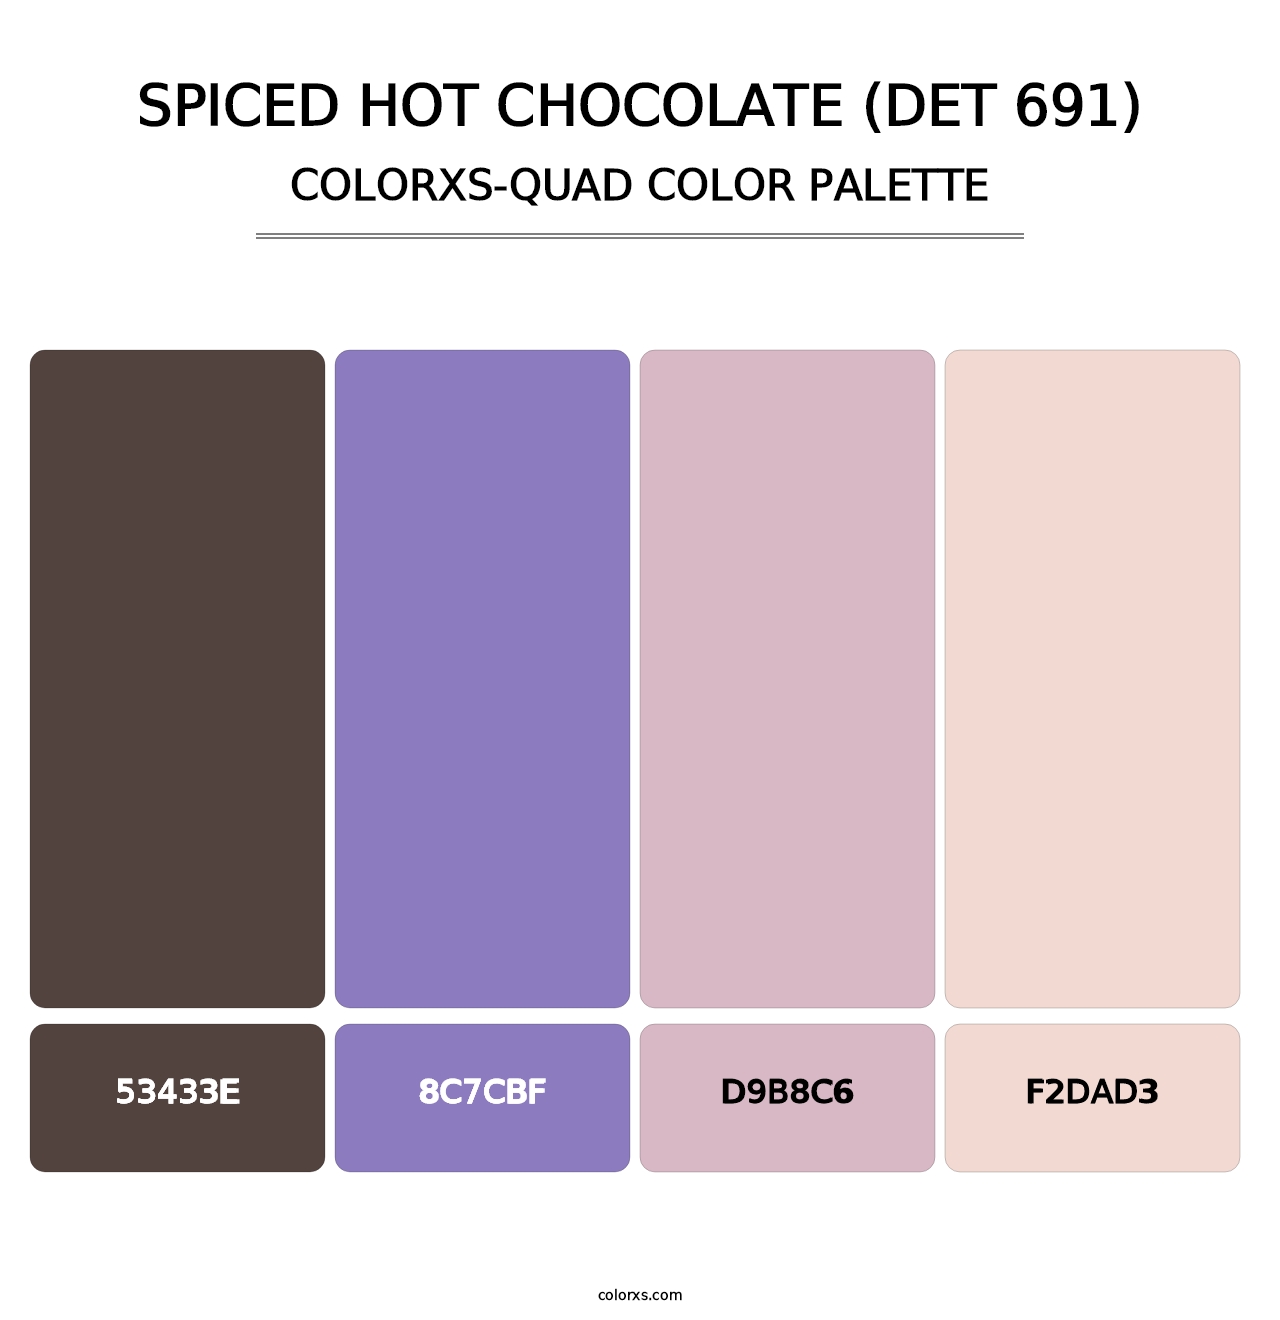 Spiced Hot Chocolate (DET 691) - Colorxs Quad Palette